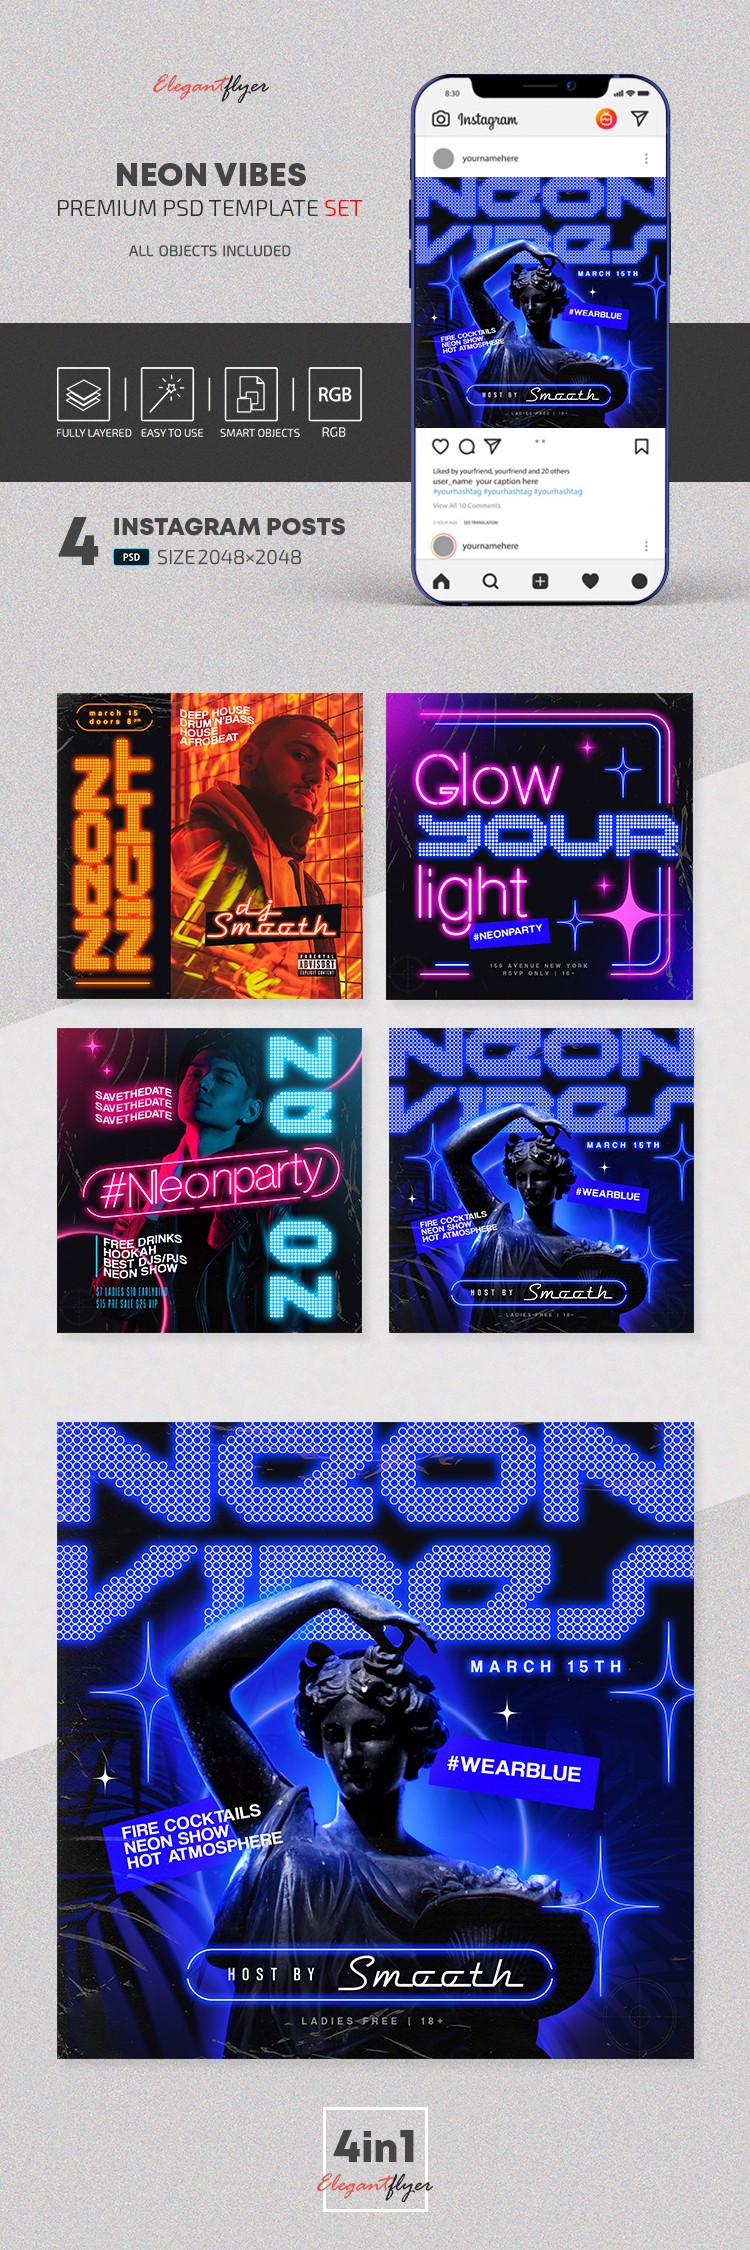 Neon Vibes Party by ElegantFlyer